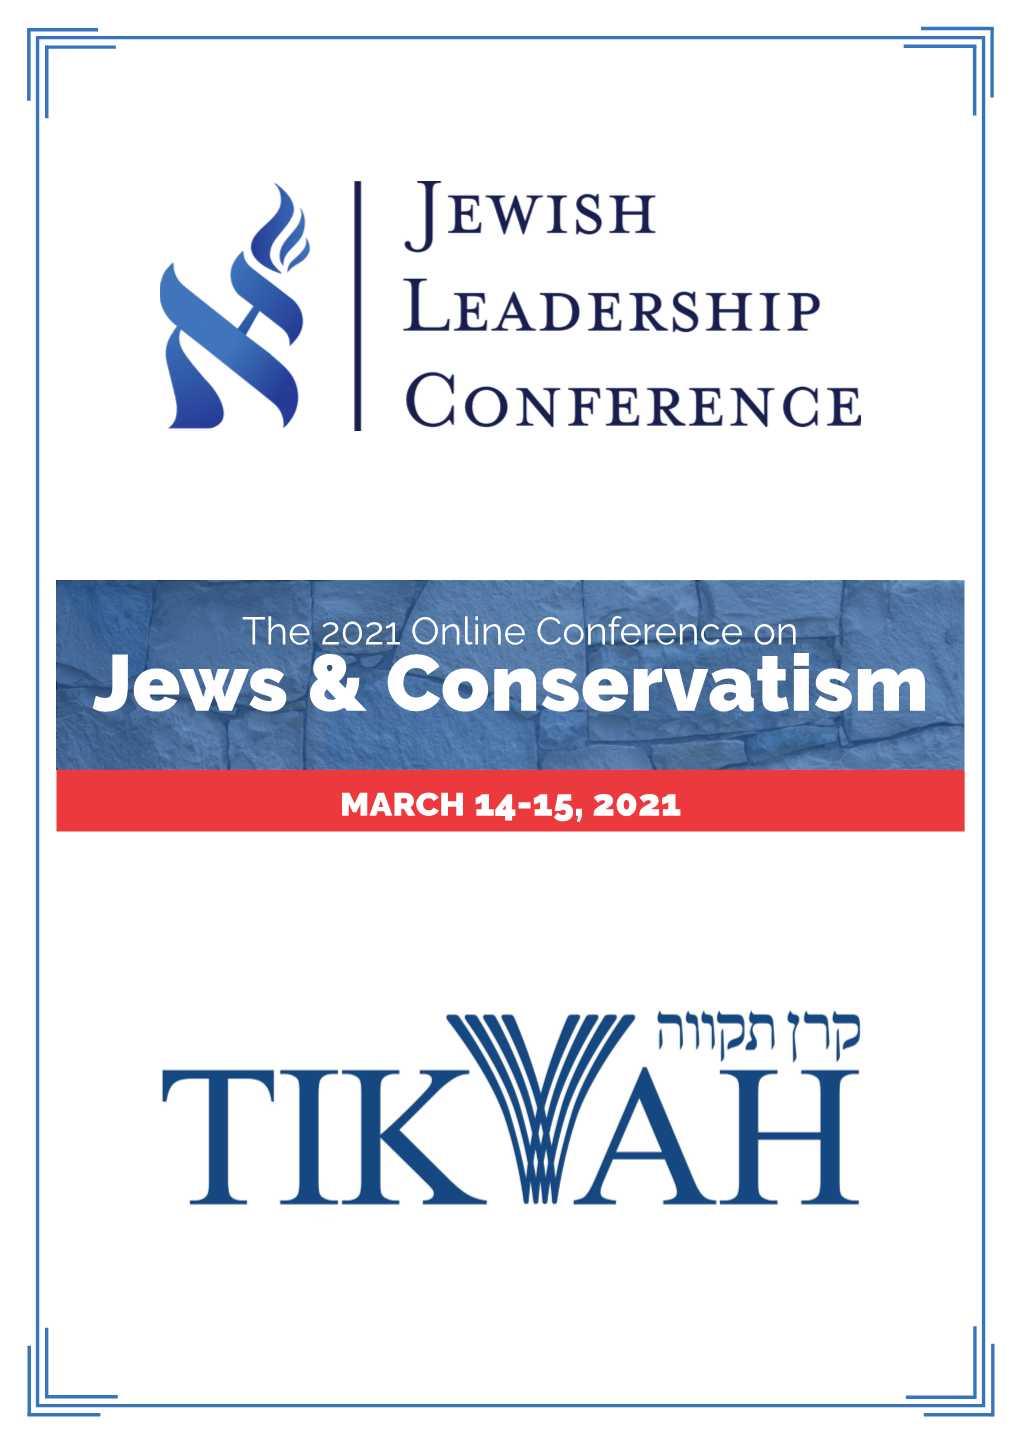 Jews & Conservatism